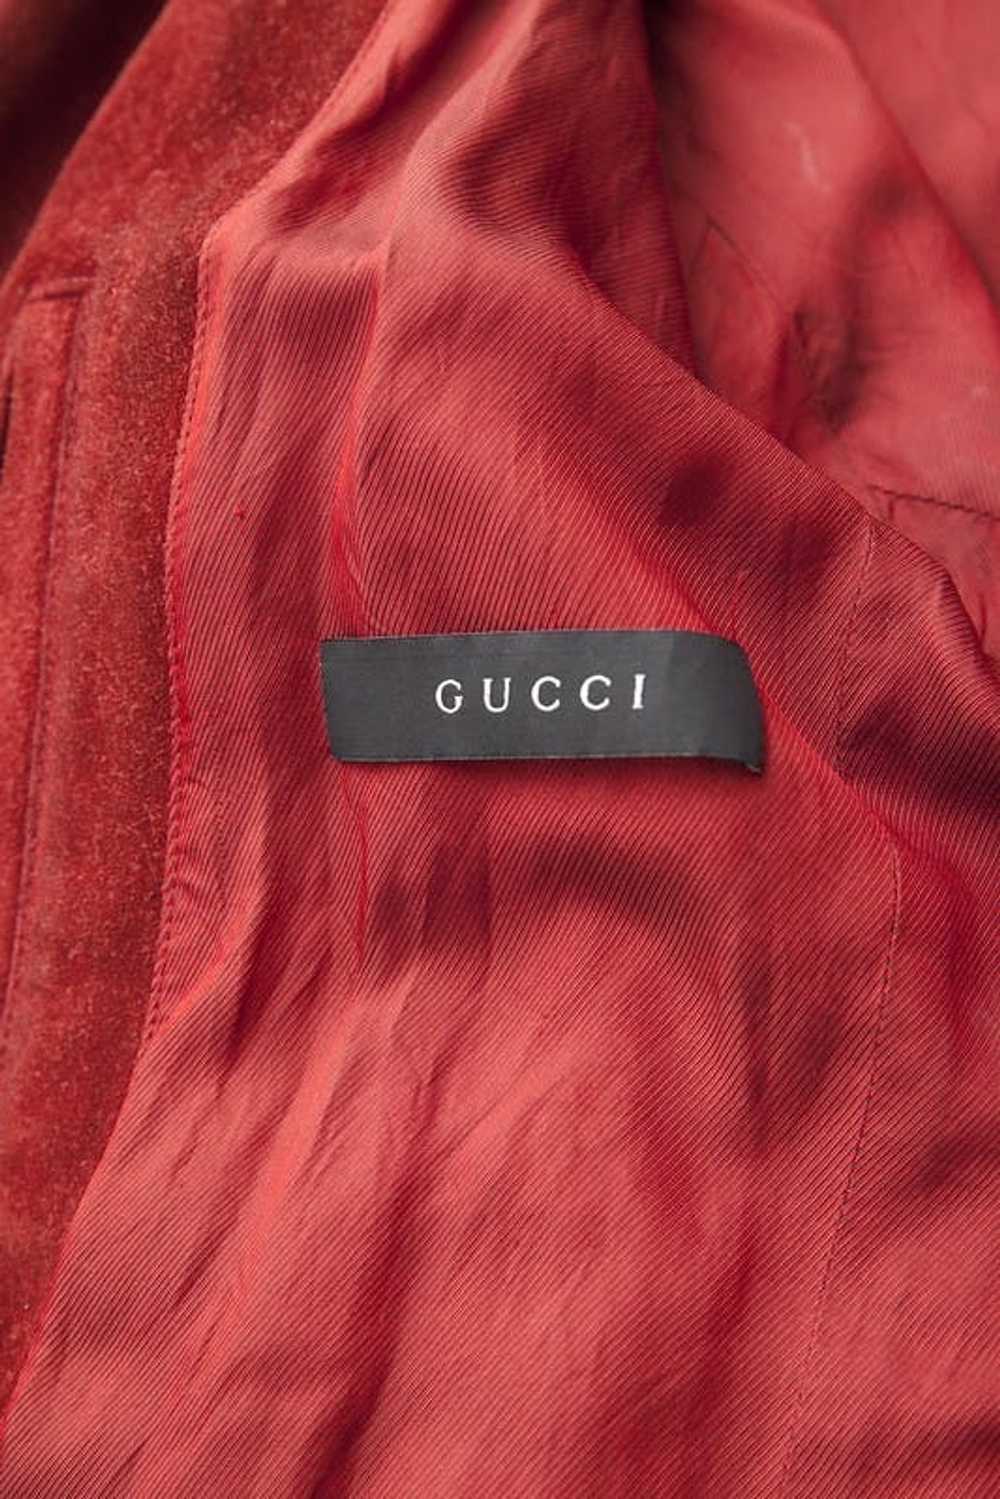 Gucci Red suede biker jacket - image 7